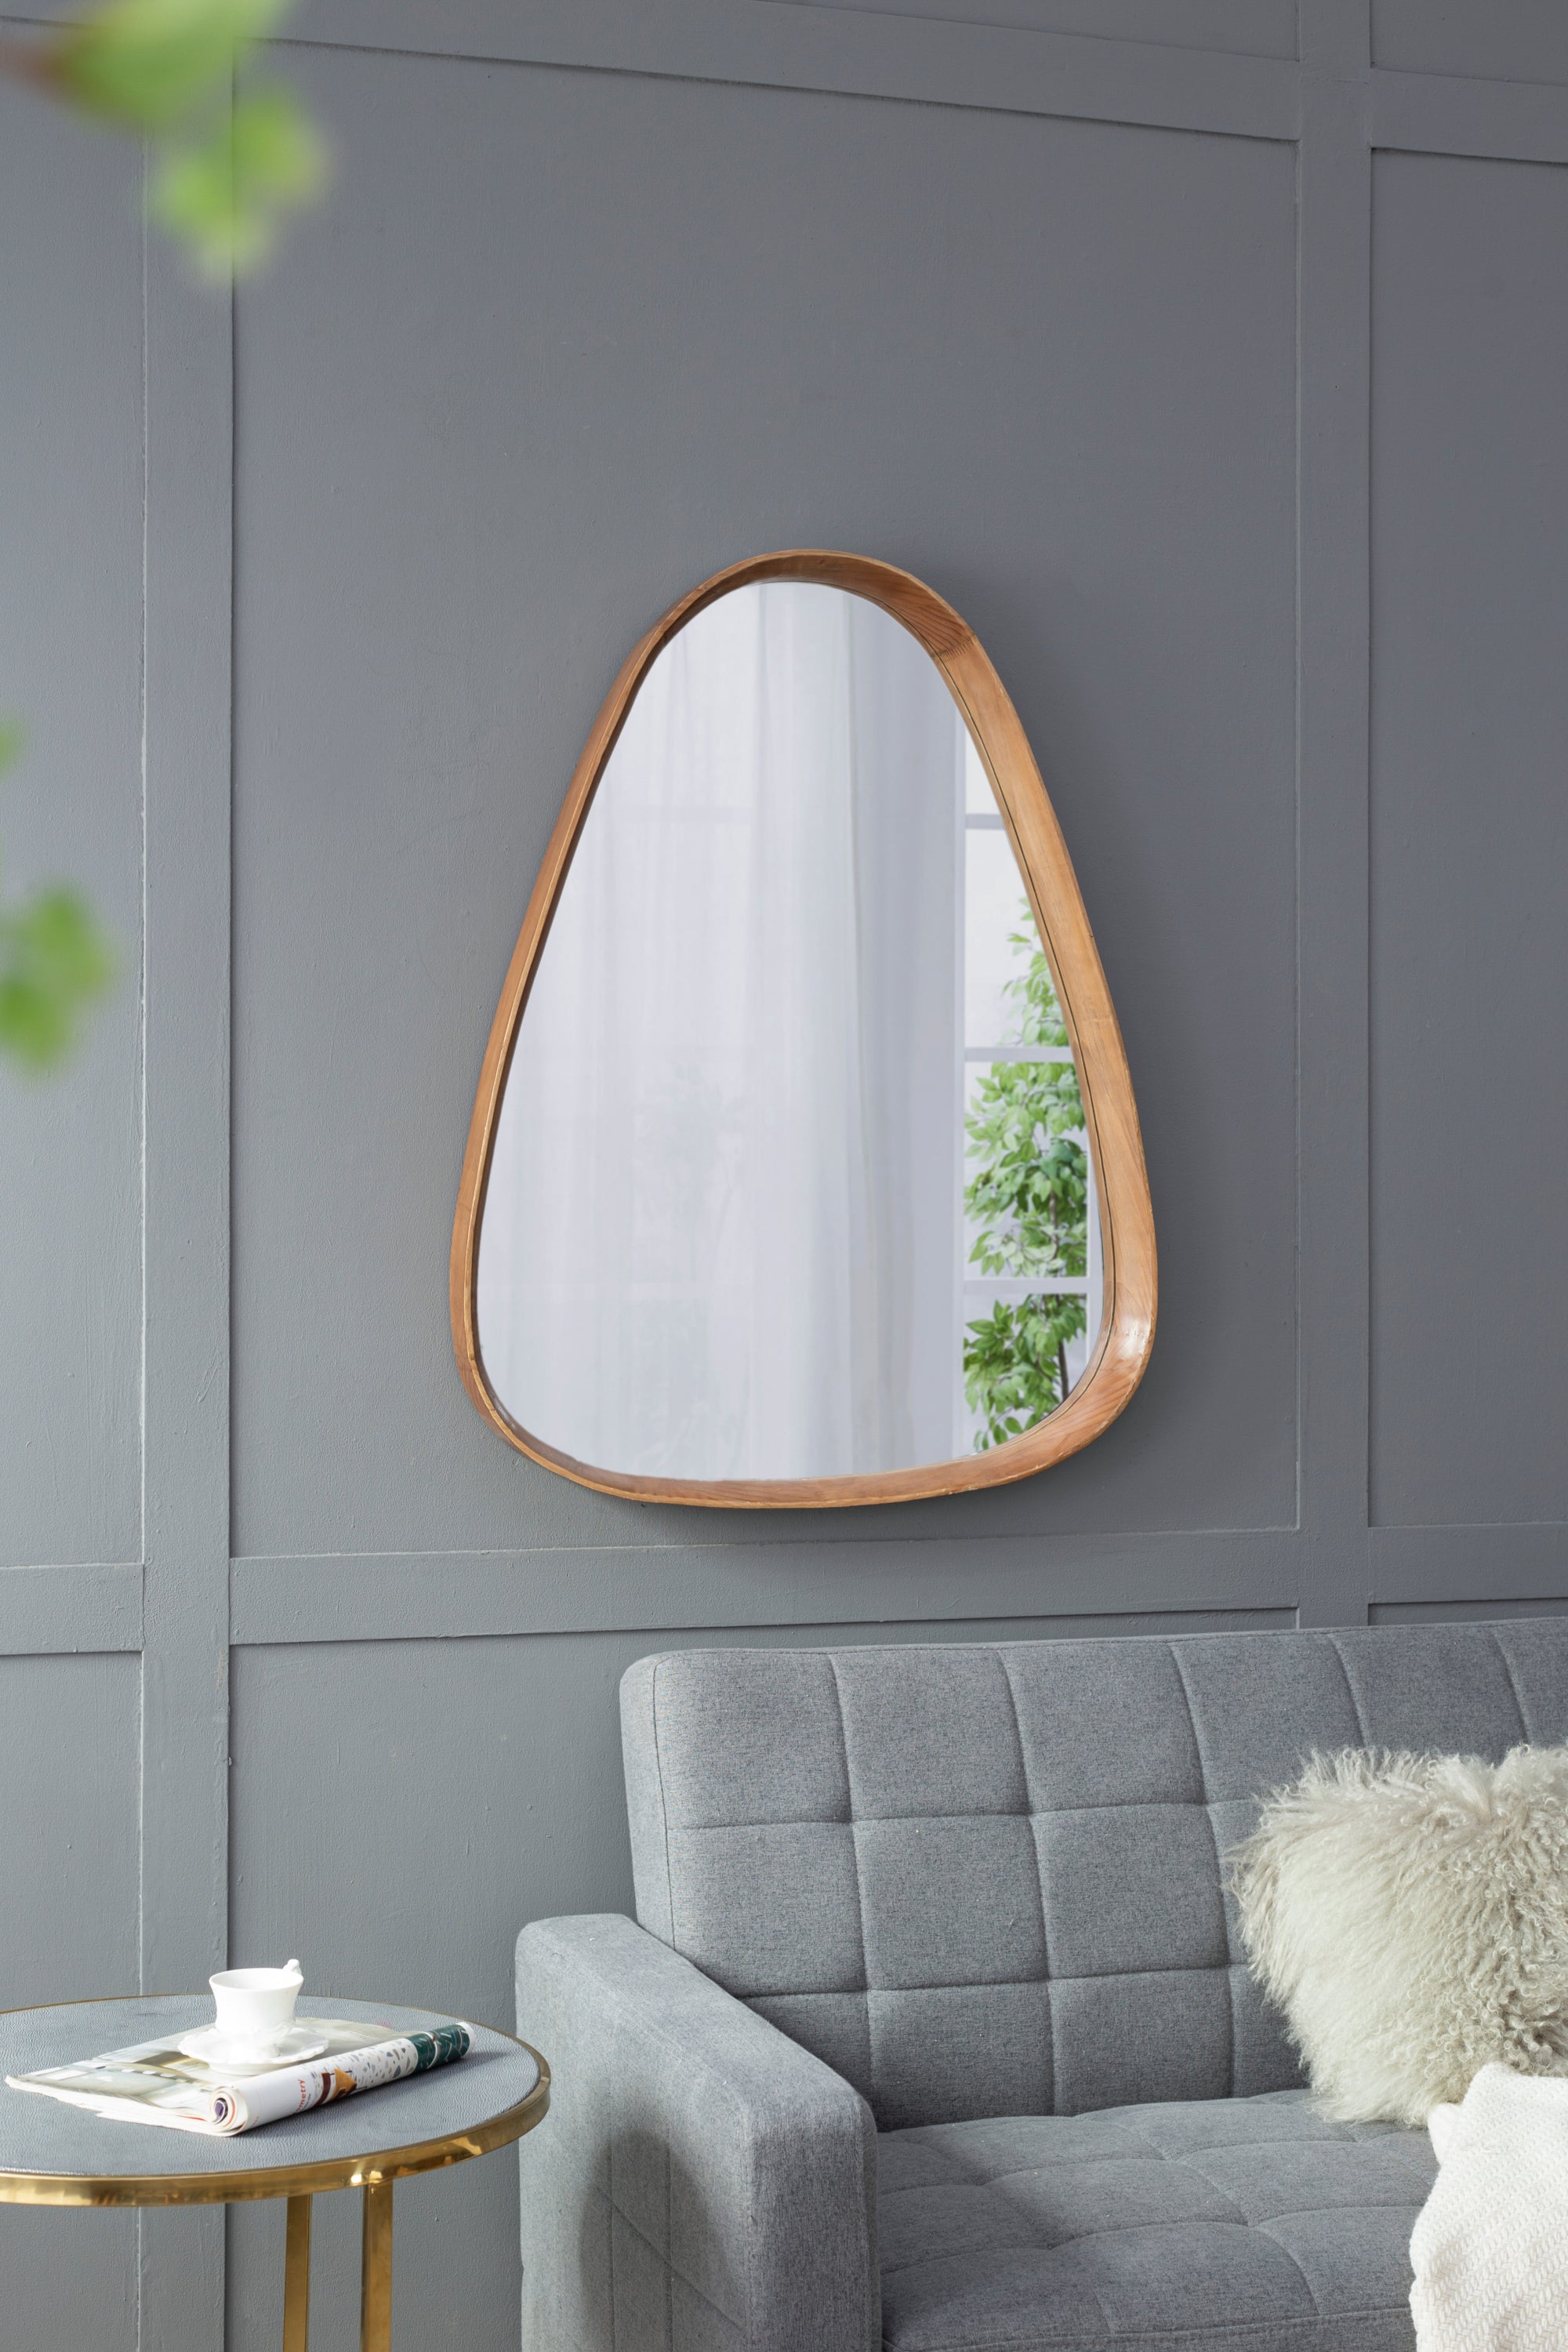 Irregular Mirror with Wood Frame 30"x38"